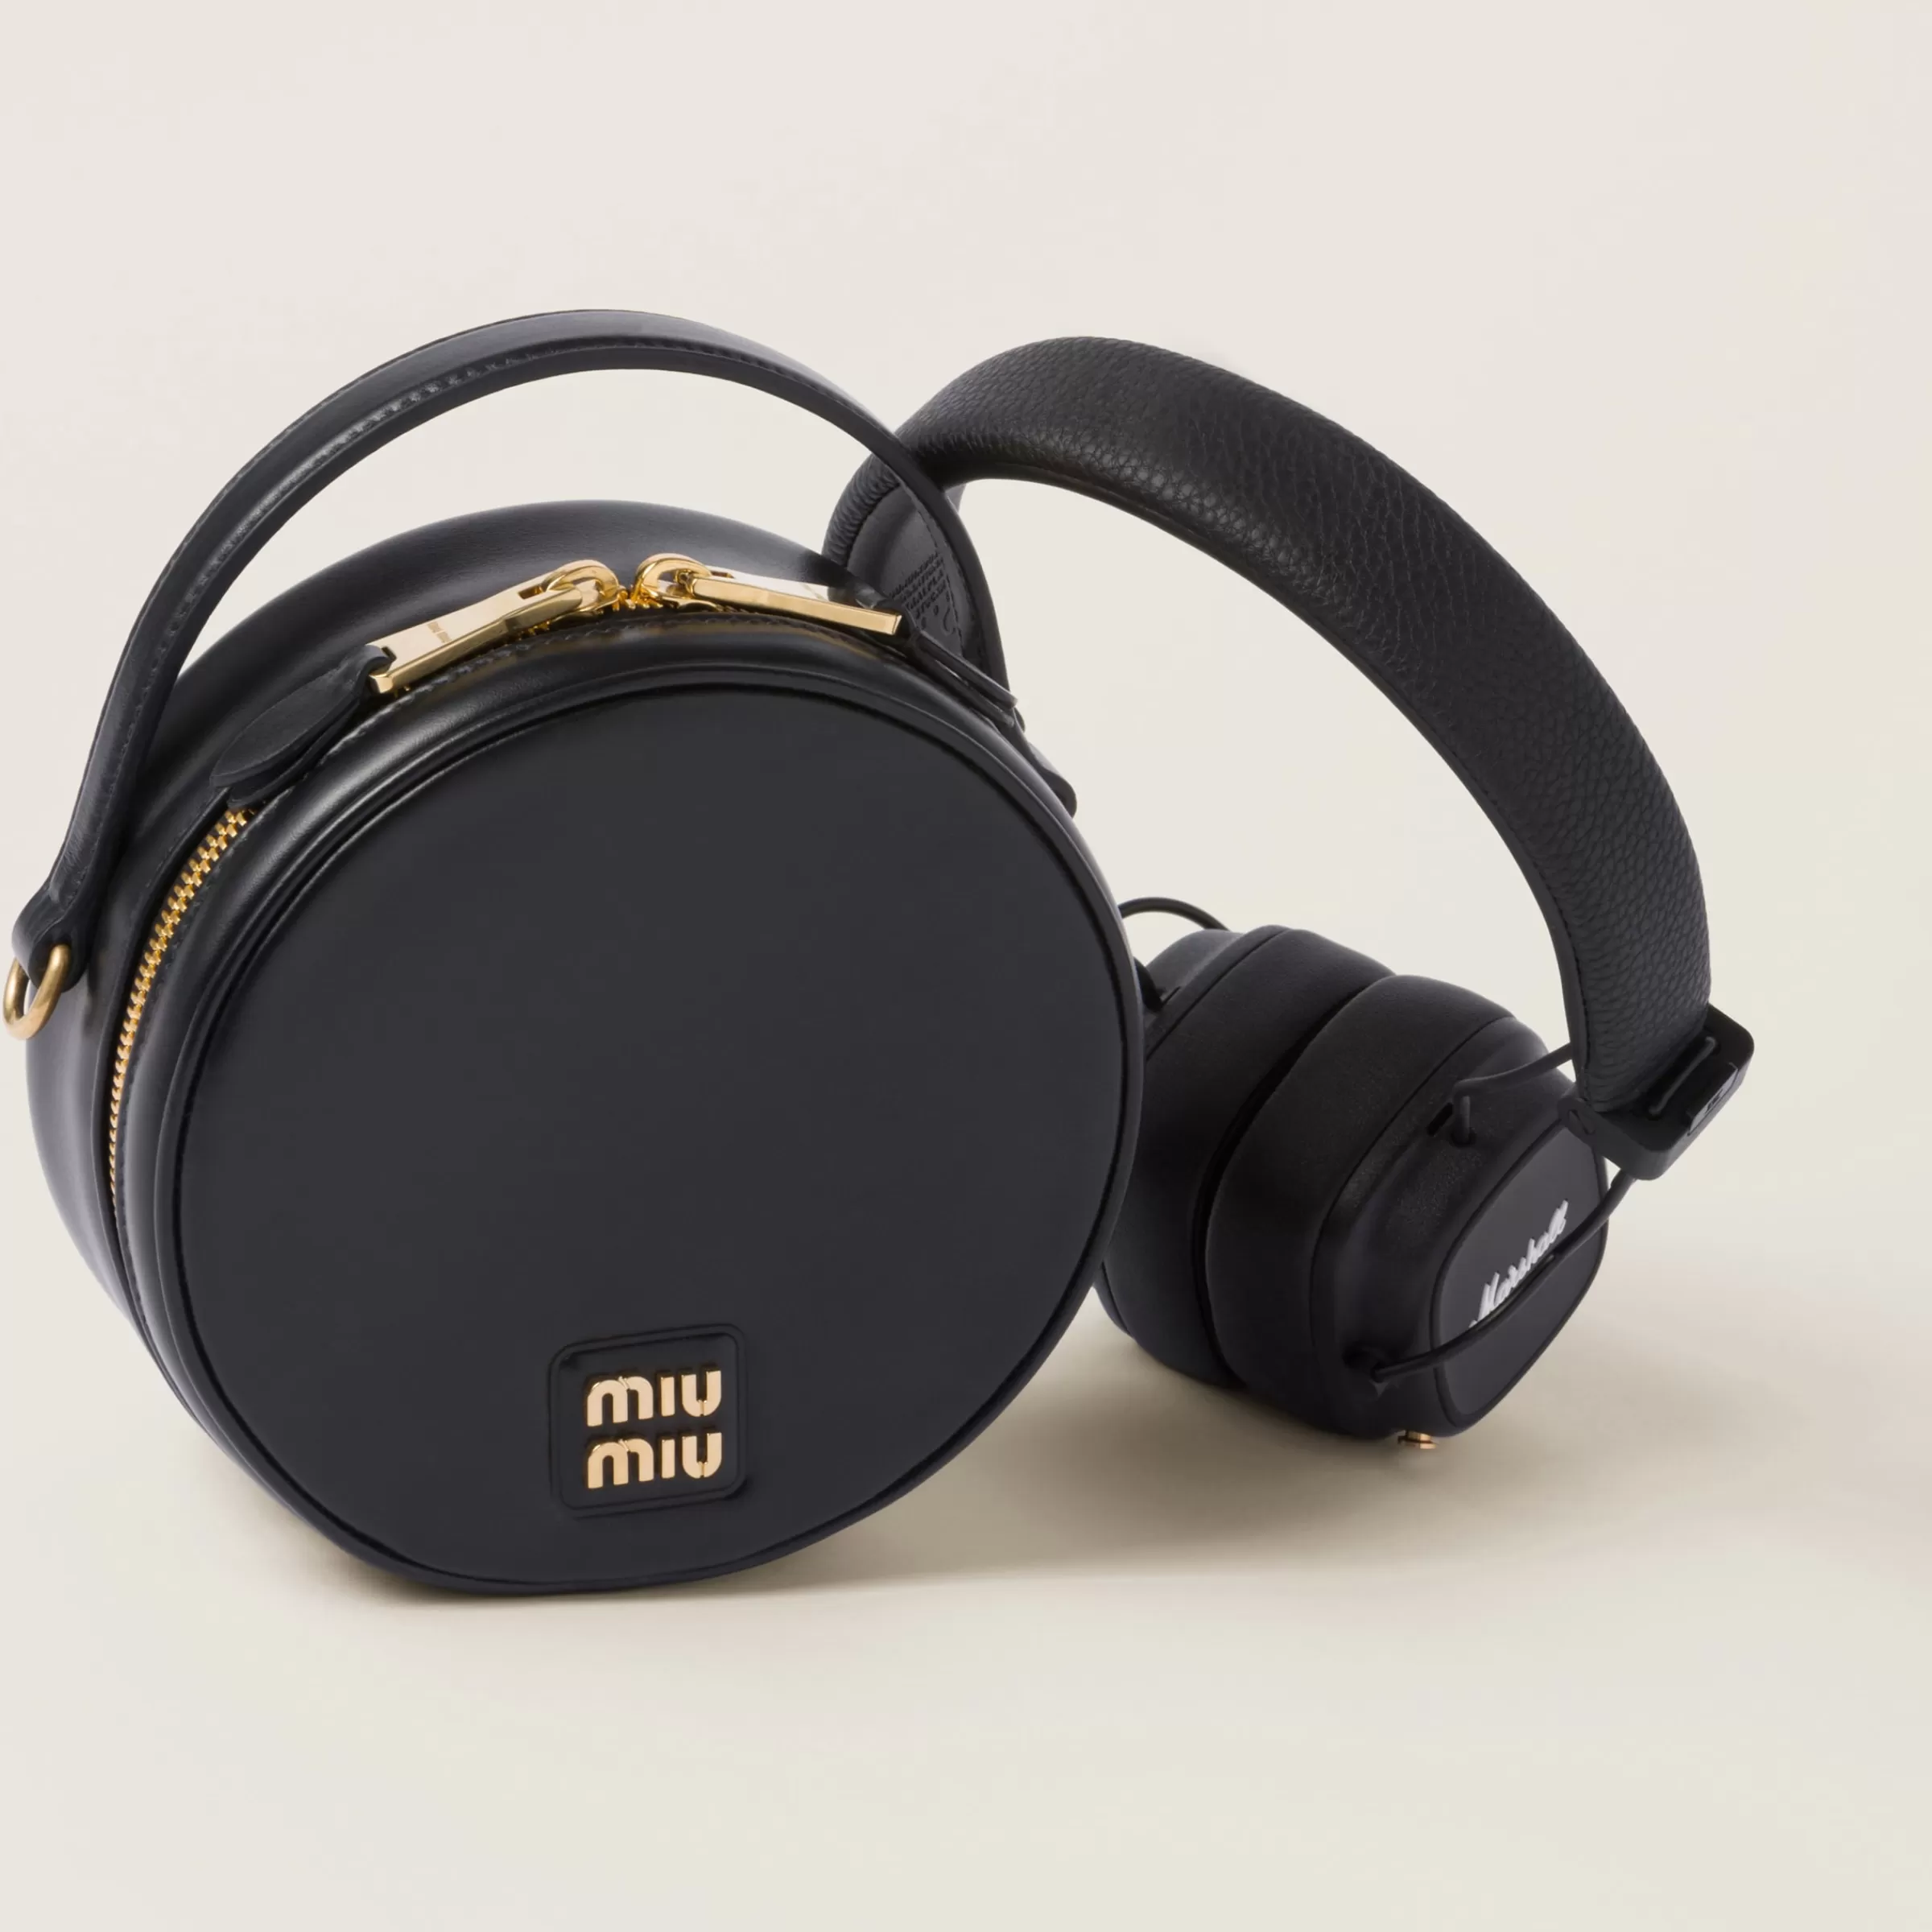 Miu Miu Marshall X Headphones With Leather Case |